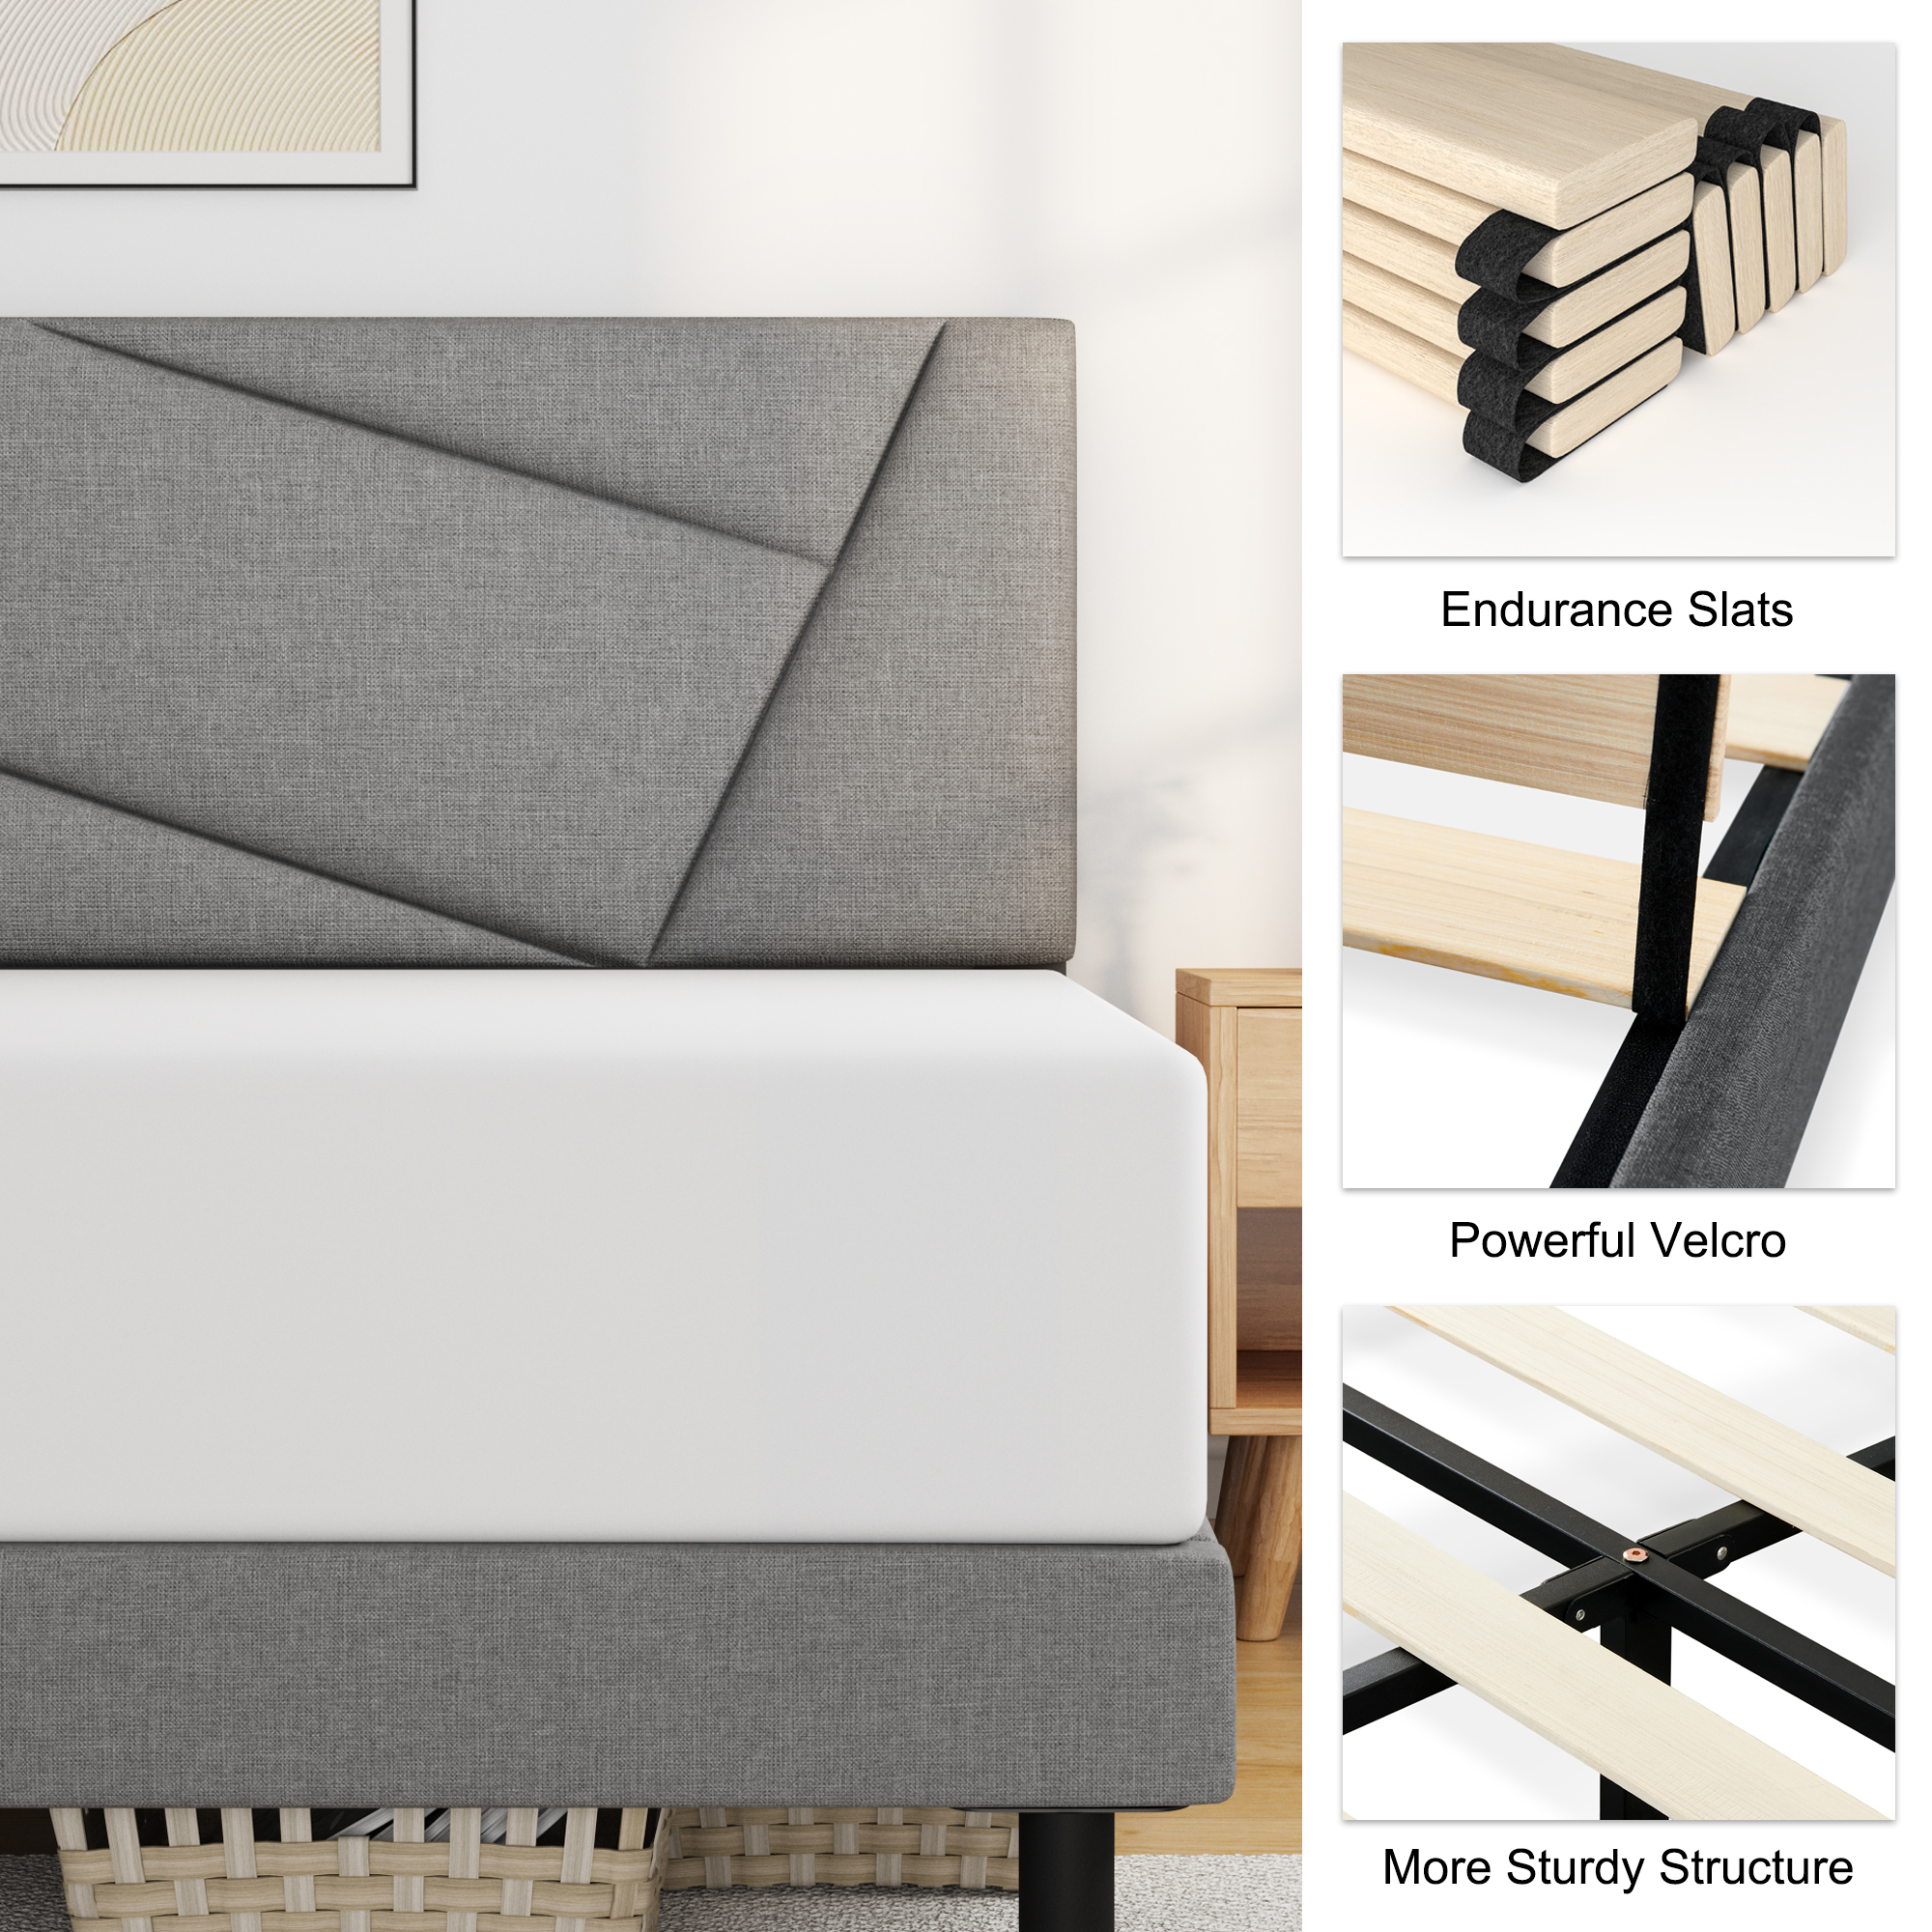 Full Bed Frame, HAIIDE Full Size Platform Bed Frame with Fabric Upholstered Headboard, Light Grey - image 4 of 7